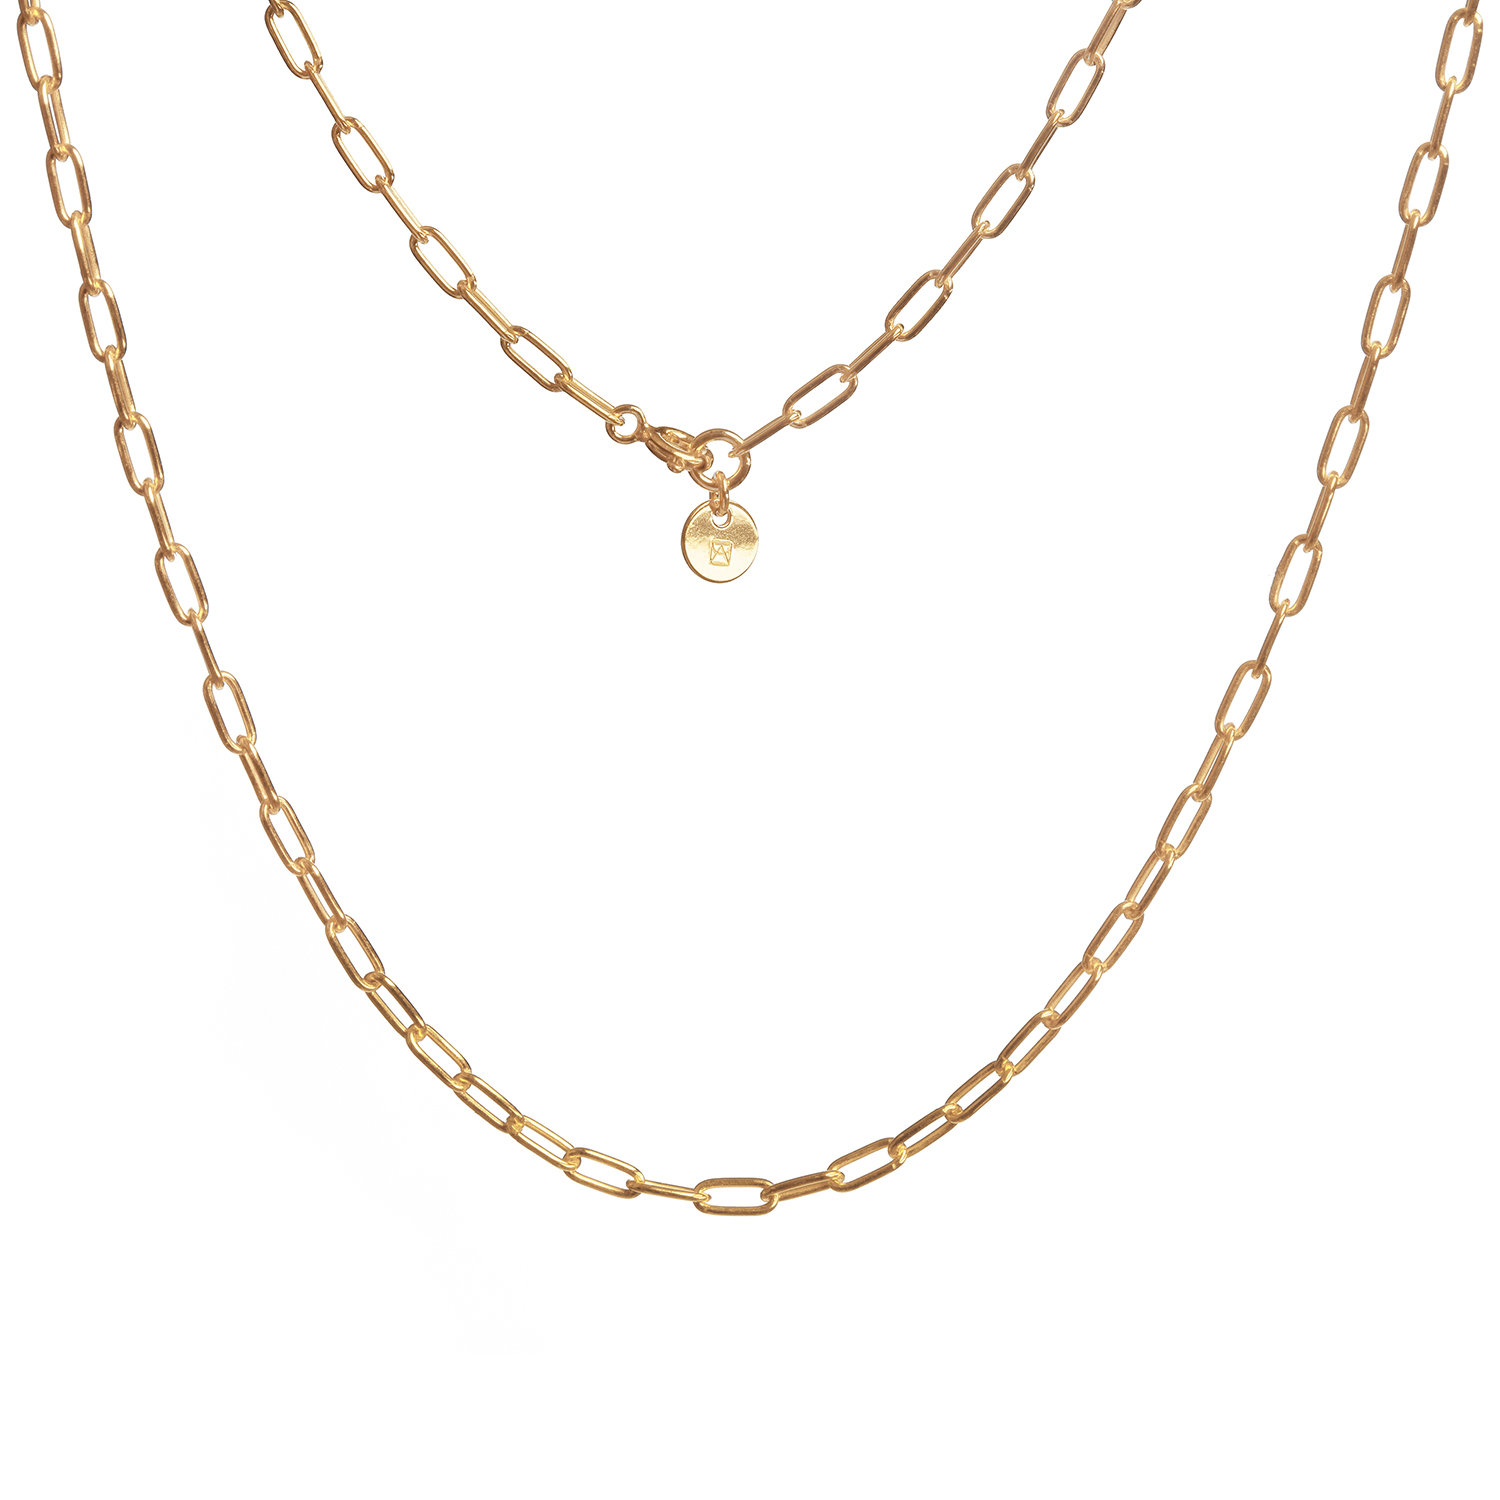 metaformi-sperky-gold-link-chain-necklace